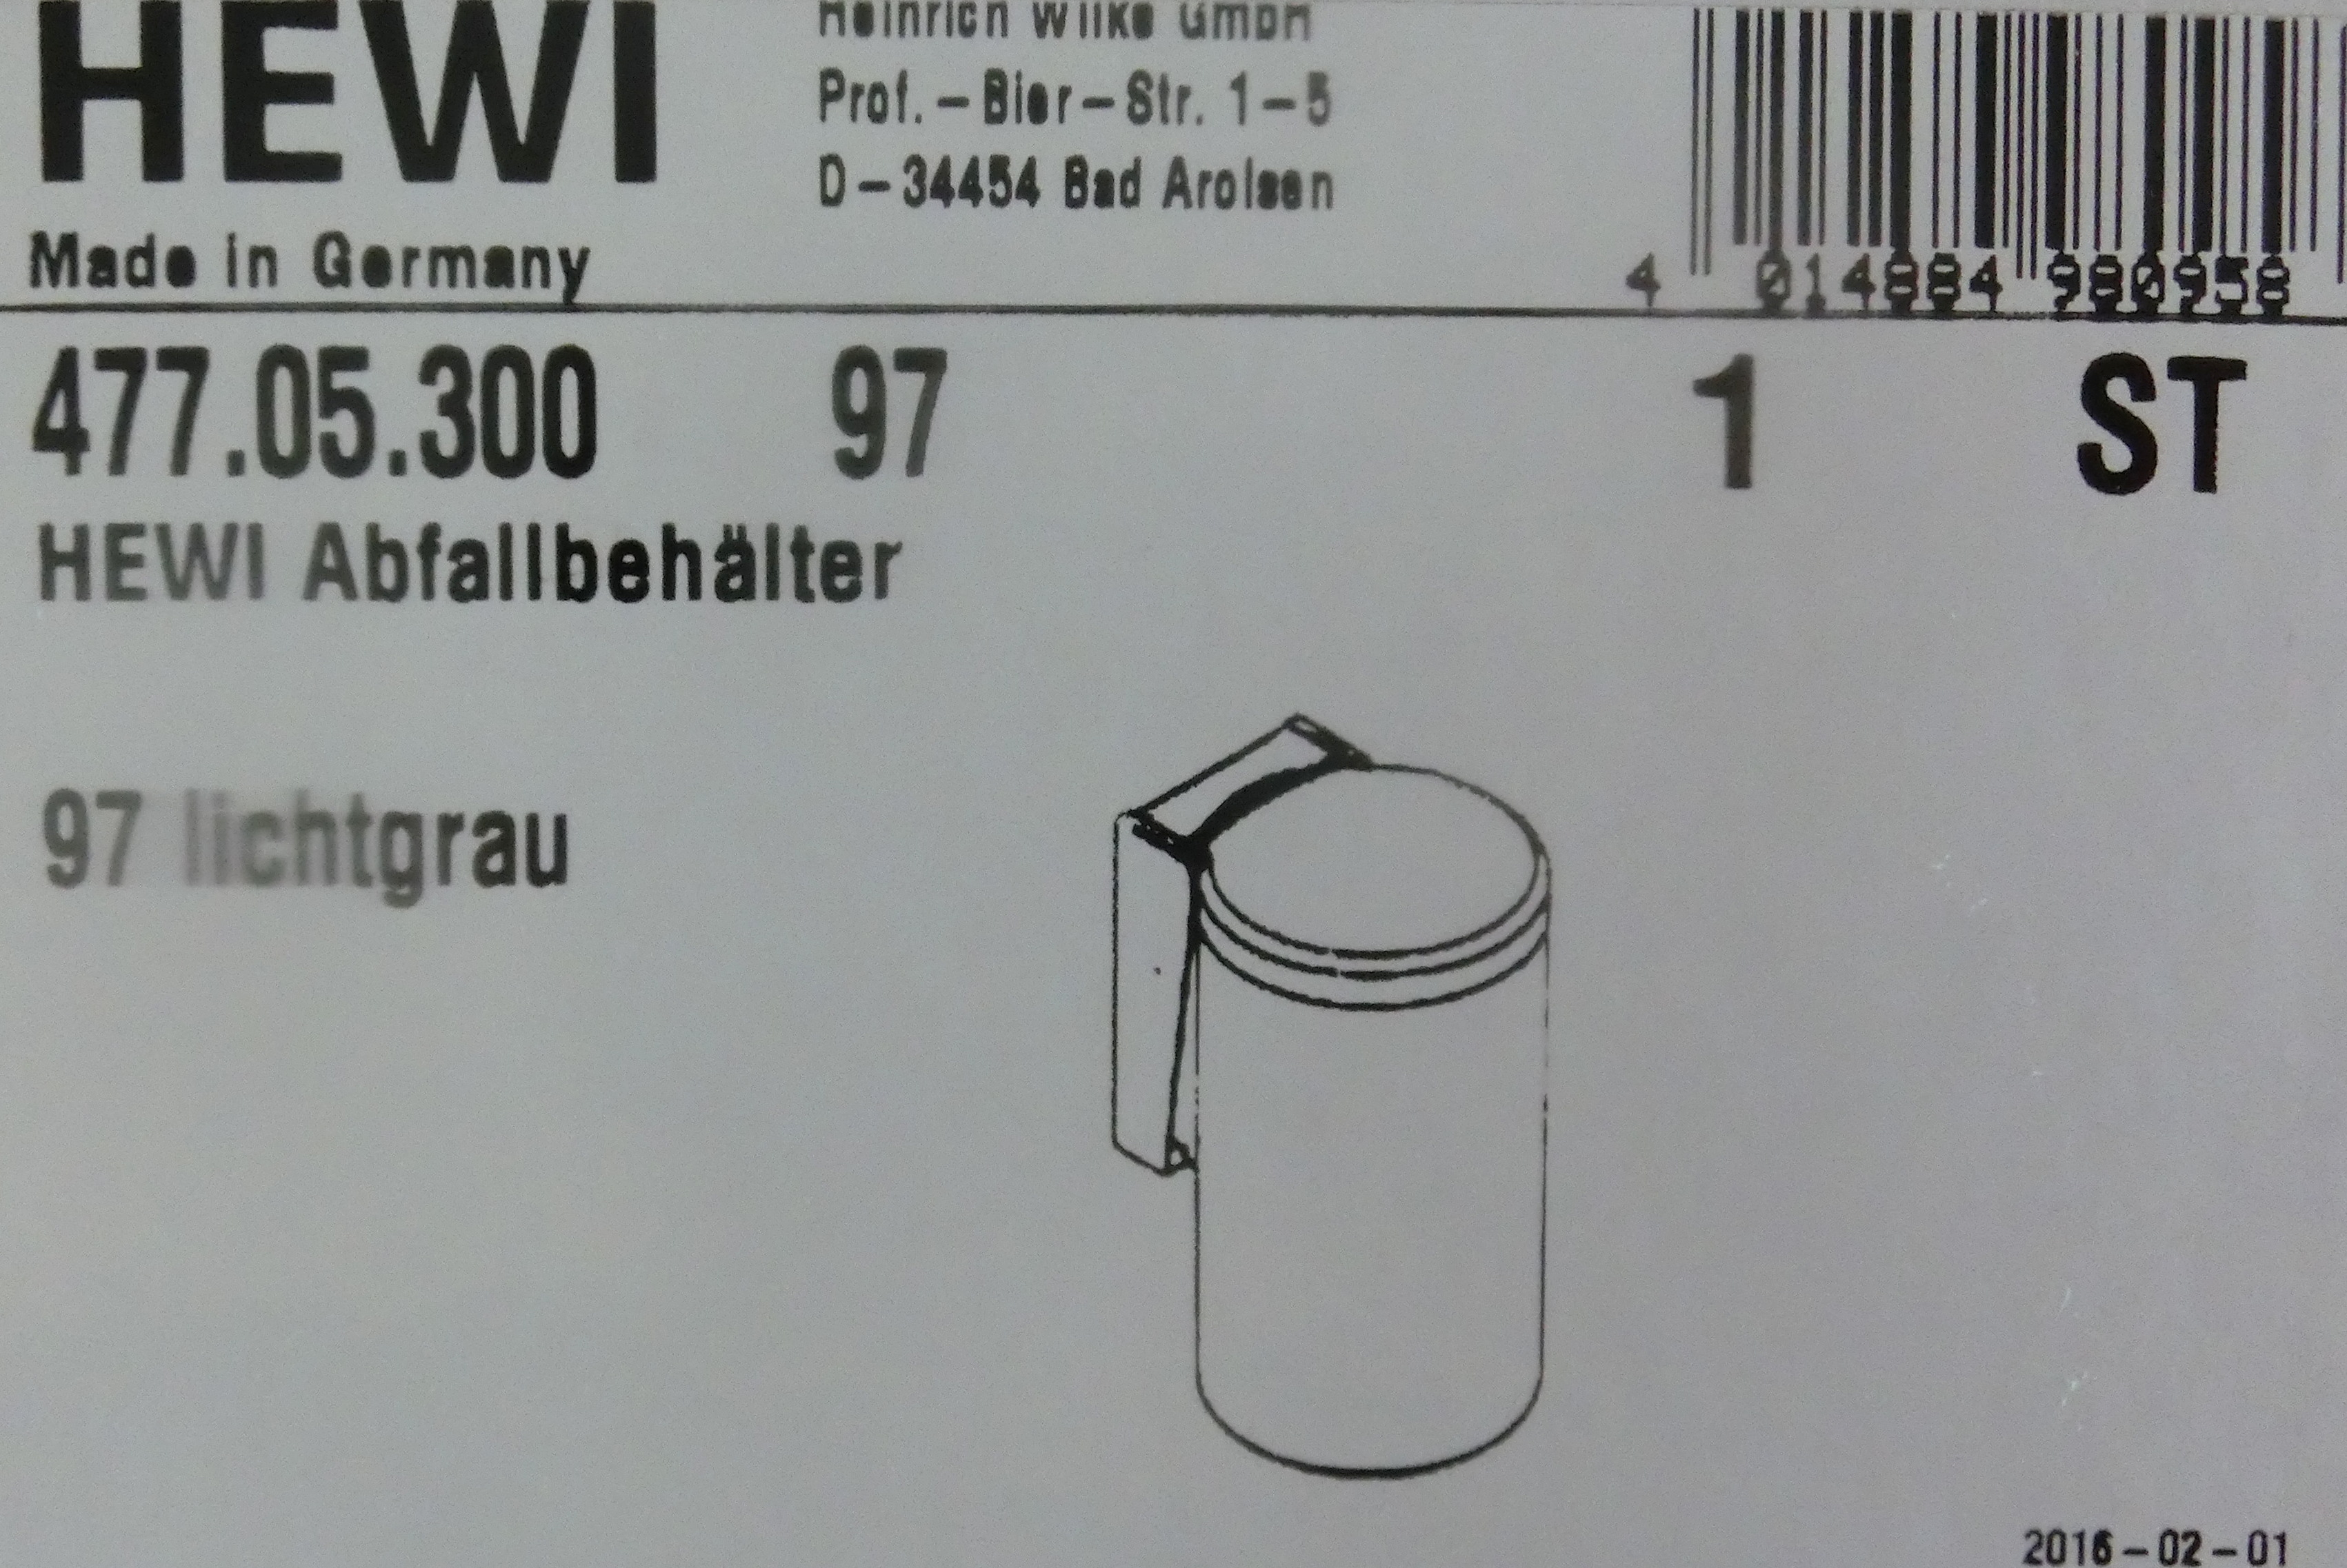 Hewi Serie 477 Abfallbehälter maigrün; 477.05.300-72 